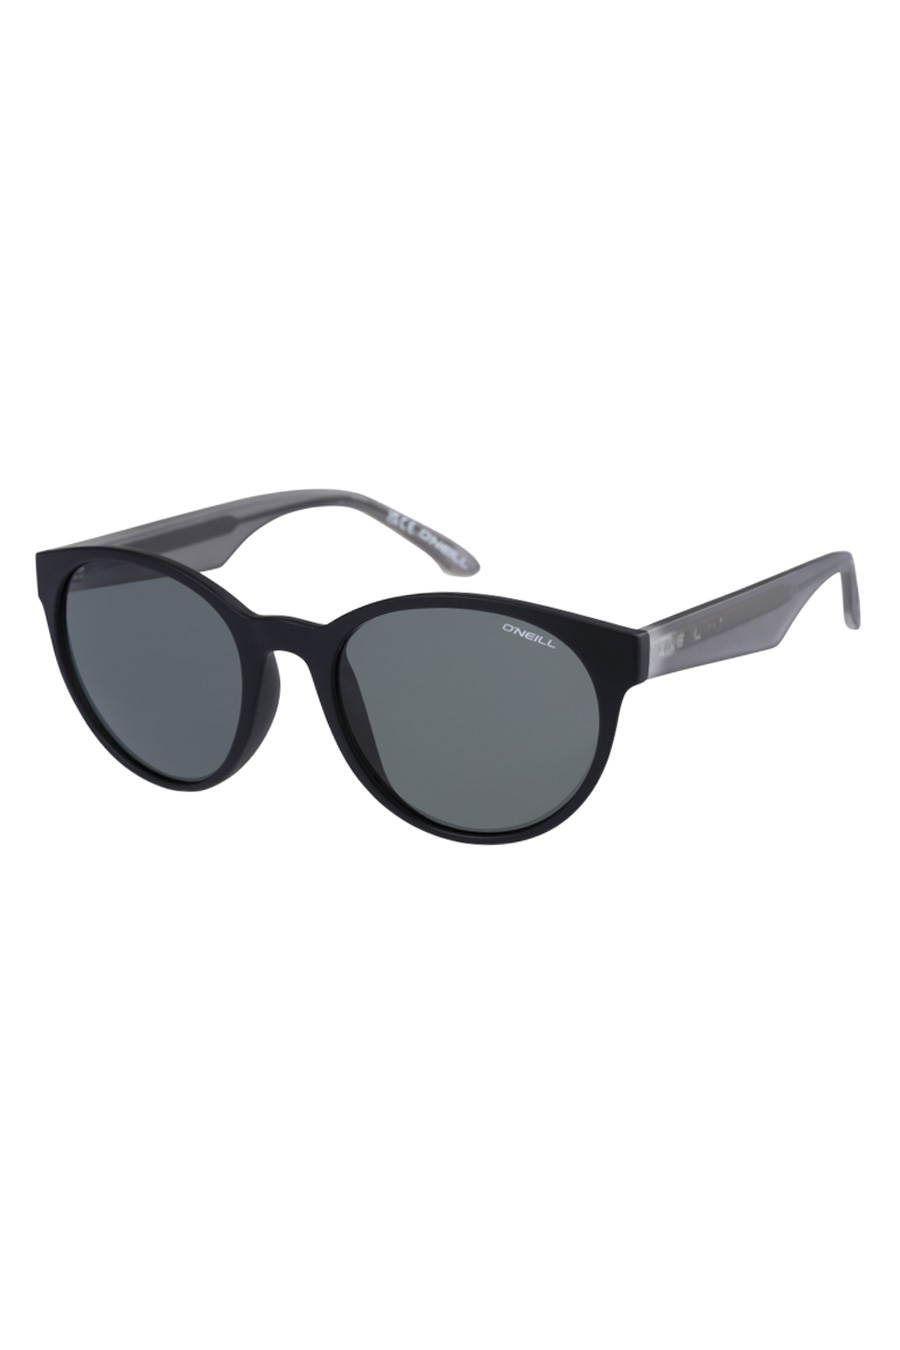 Солнечные очки ONEILL ONS-9009-20-104P